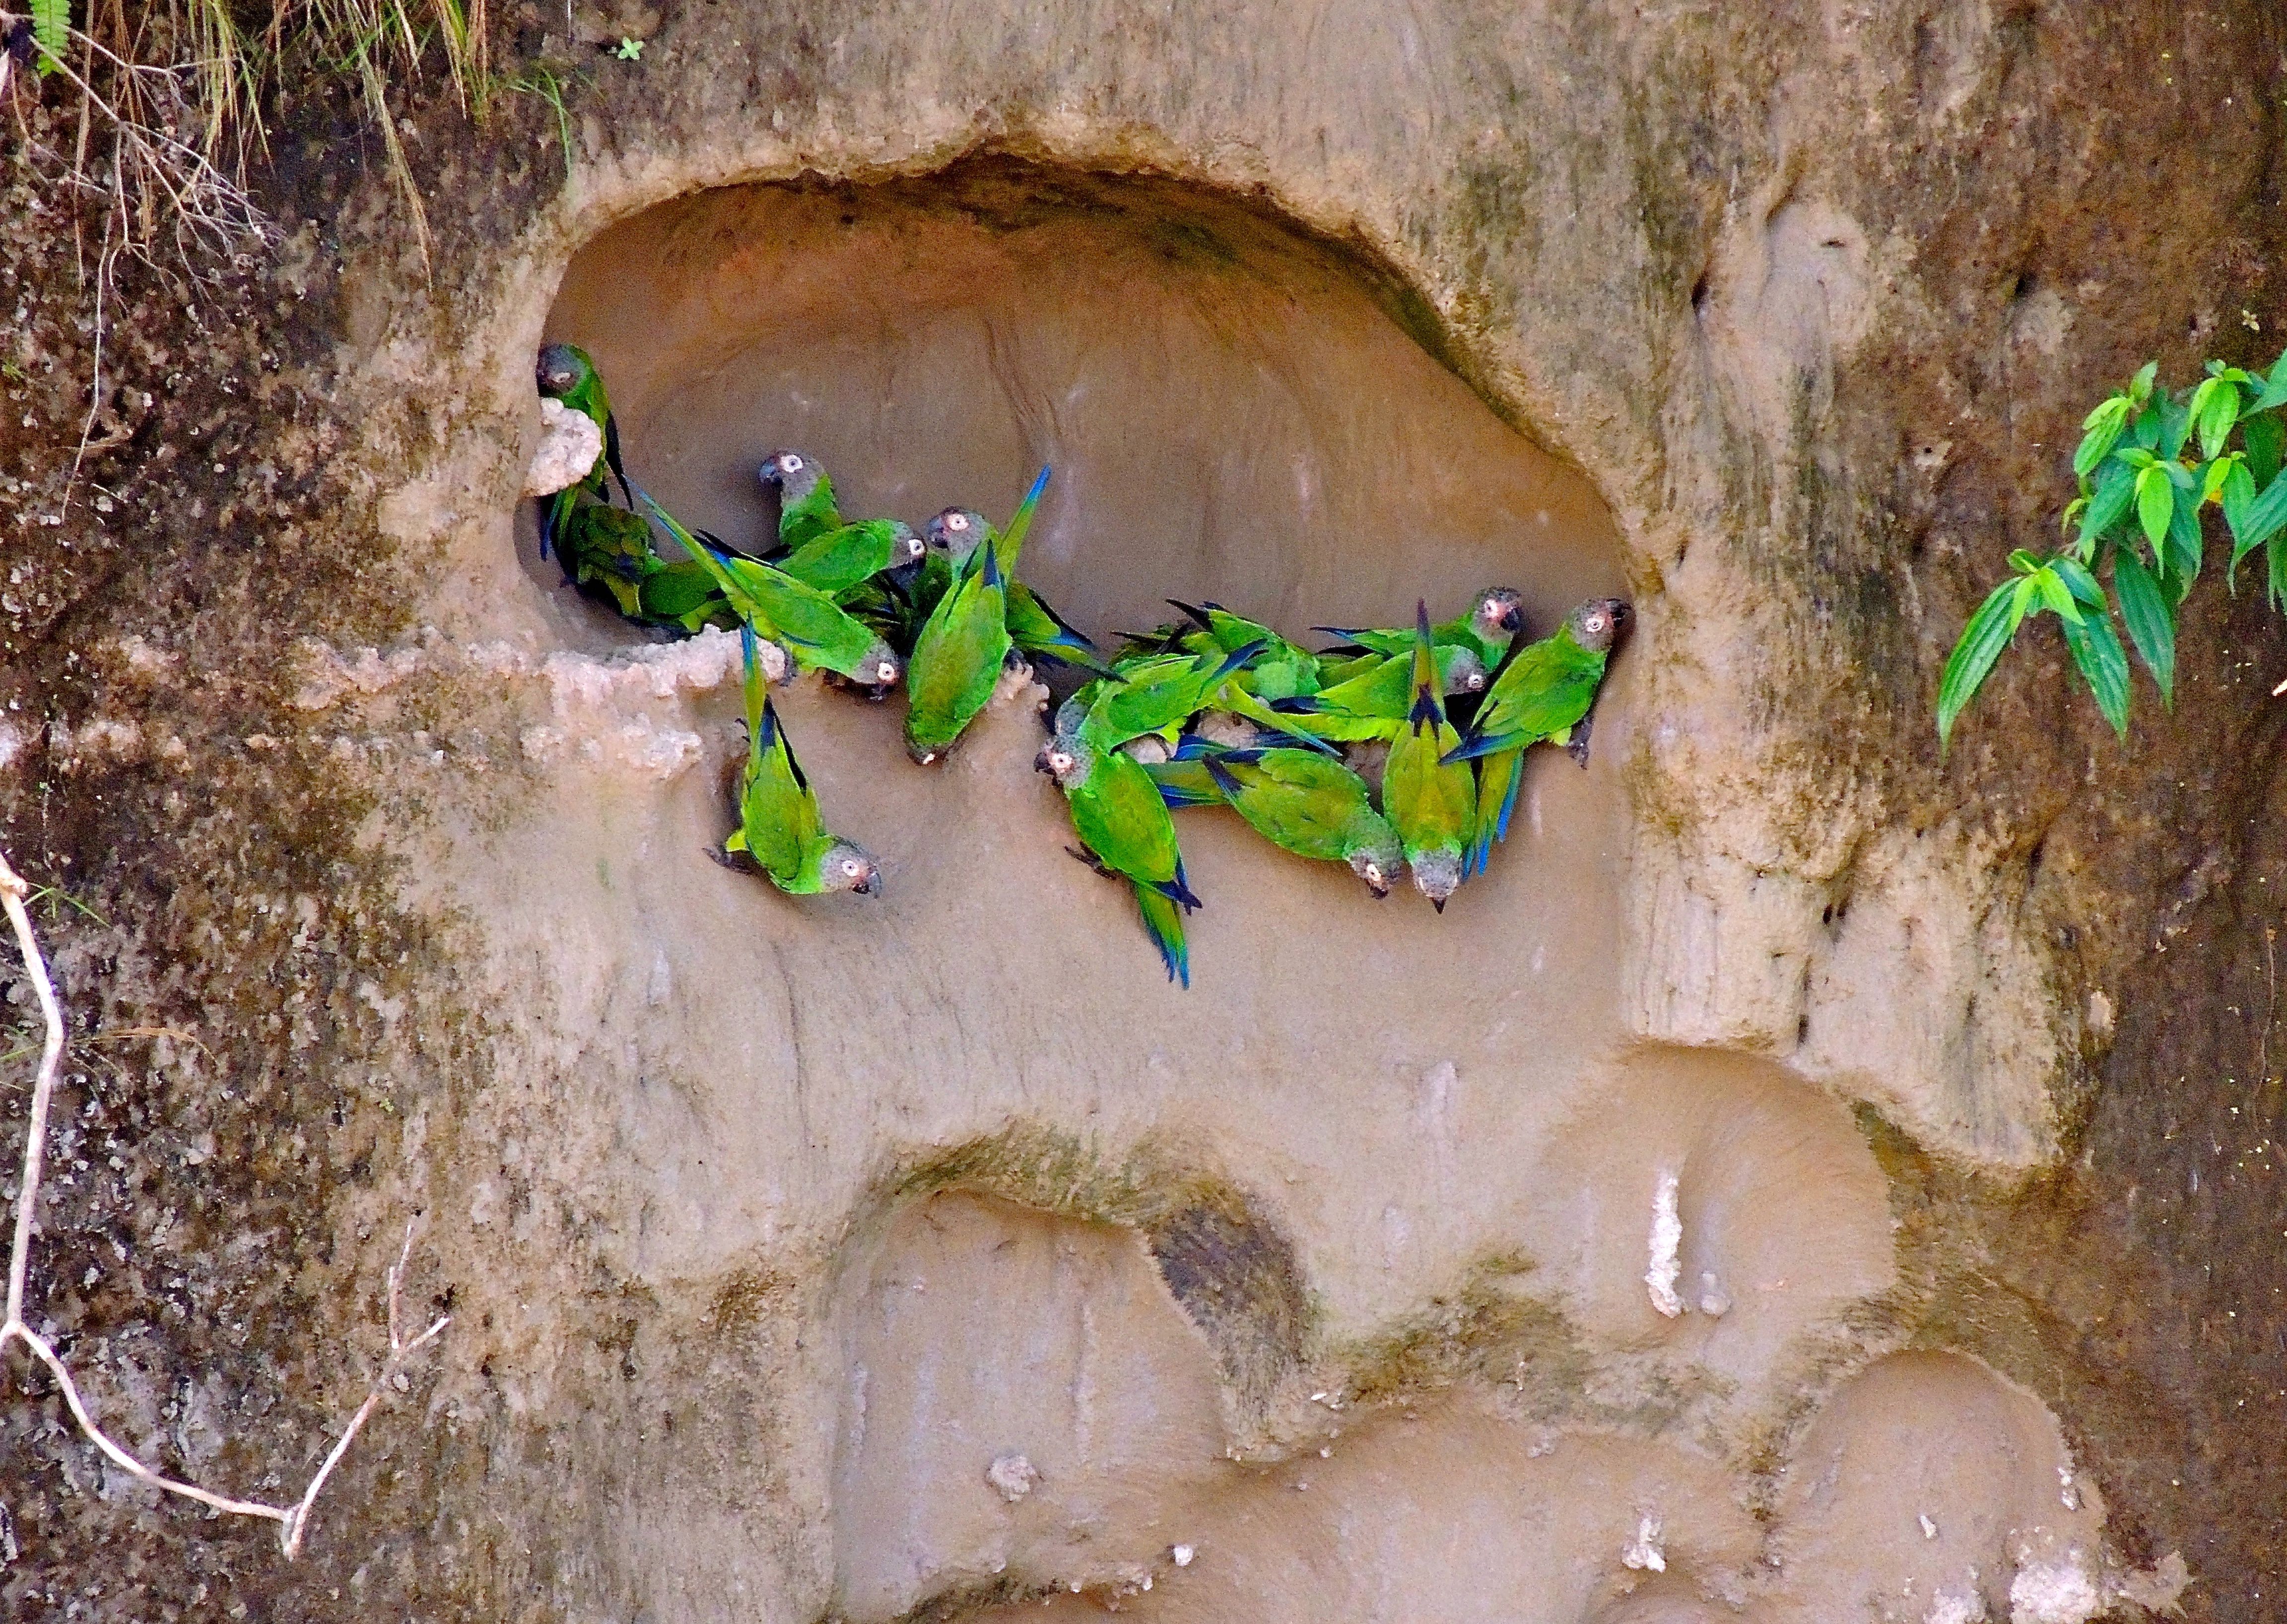 Dusky-headed Parakeets